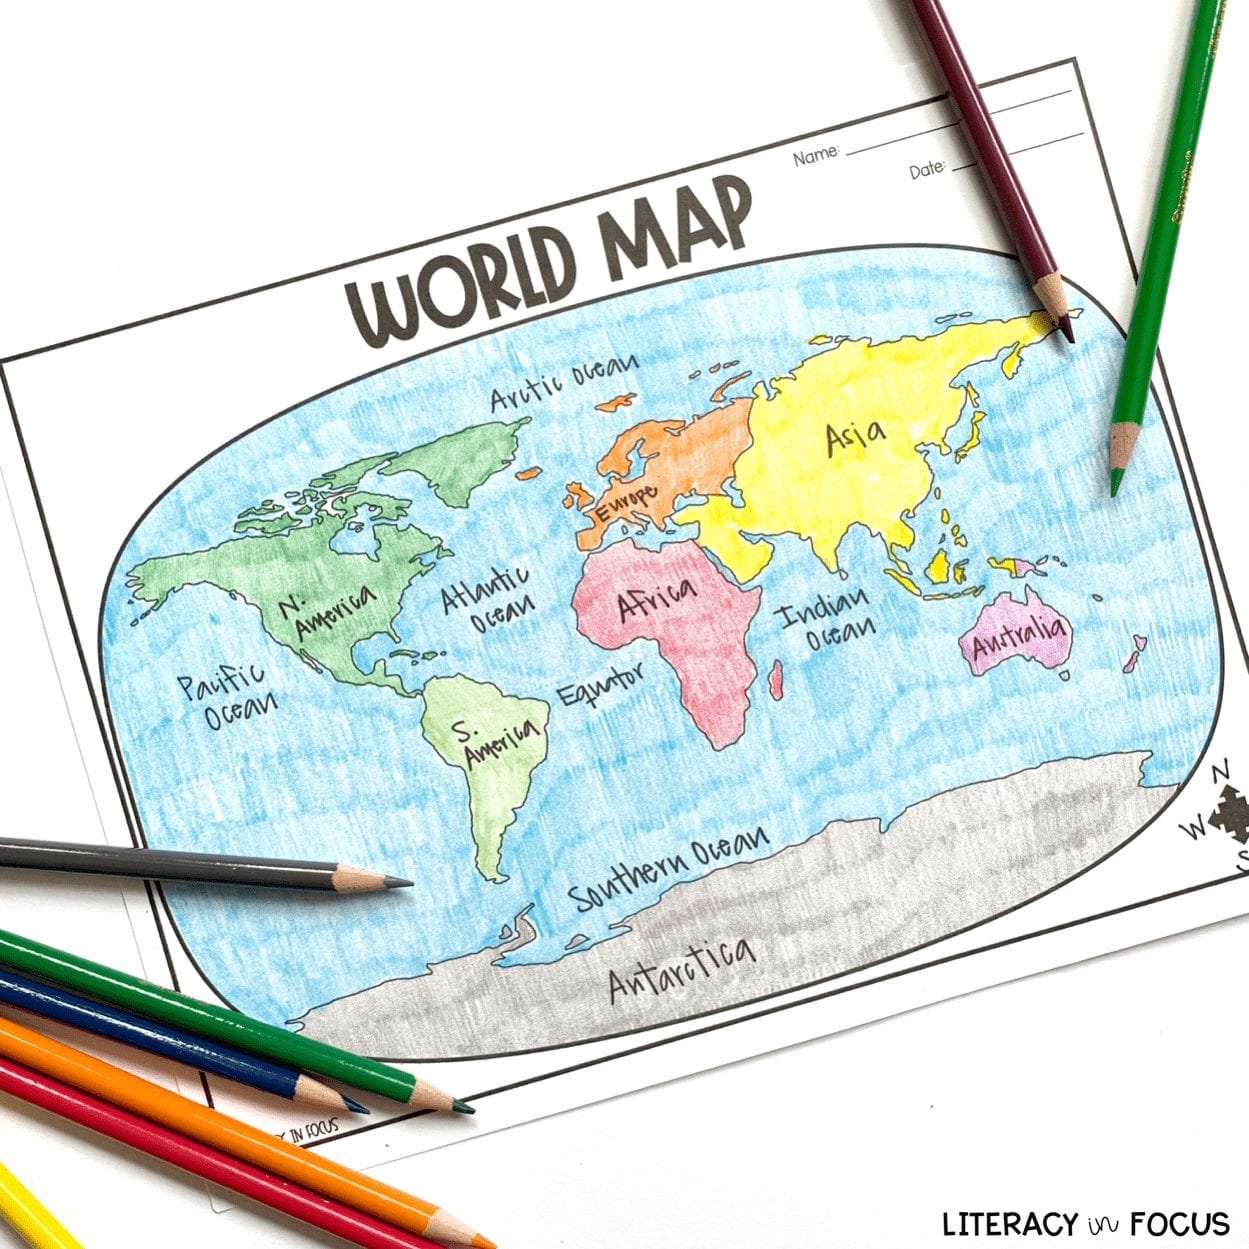 World Map worksheet activity